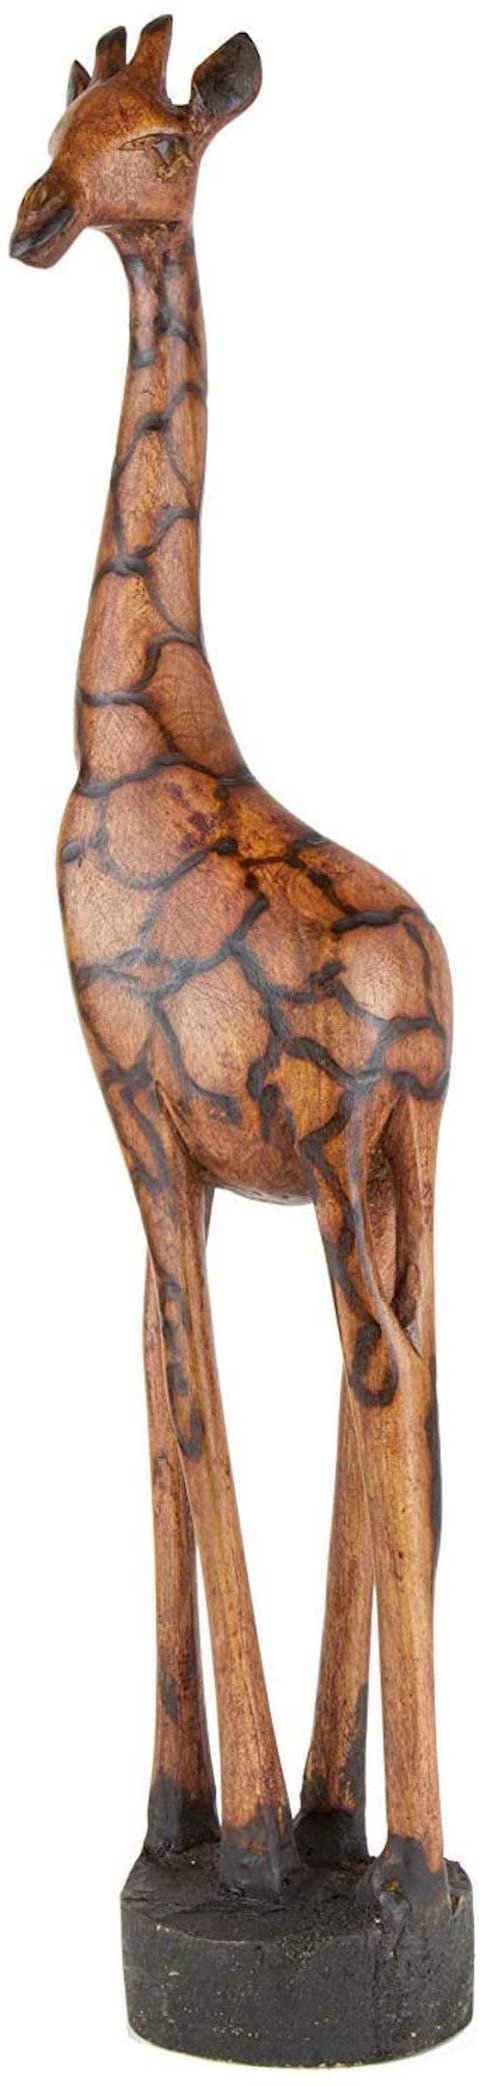 Afrika-Deko Afrikafigur »Samia«, Handarbeit aus SIMBABWE sehr hochwertige Holz Giraffe